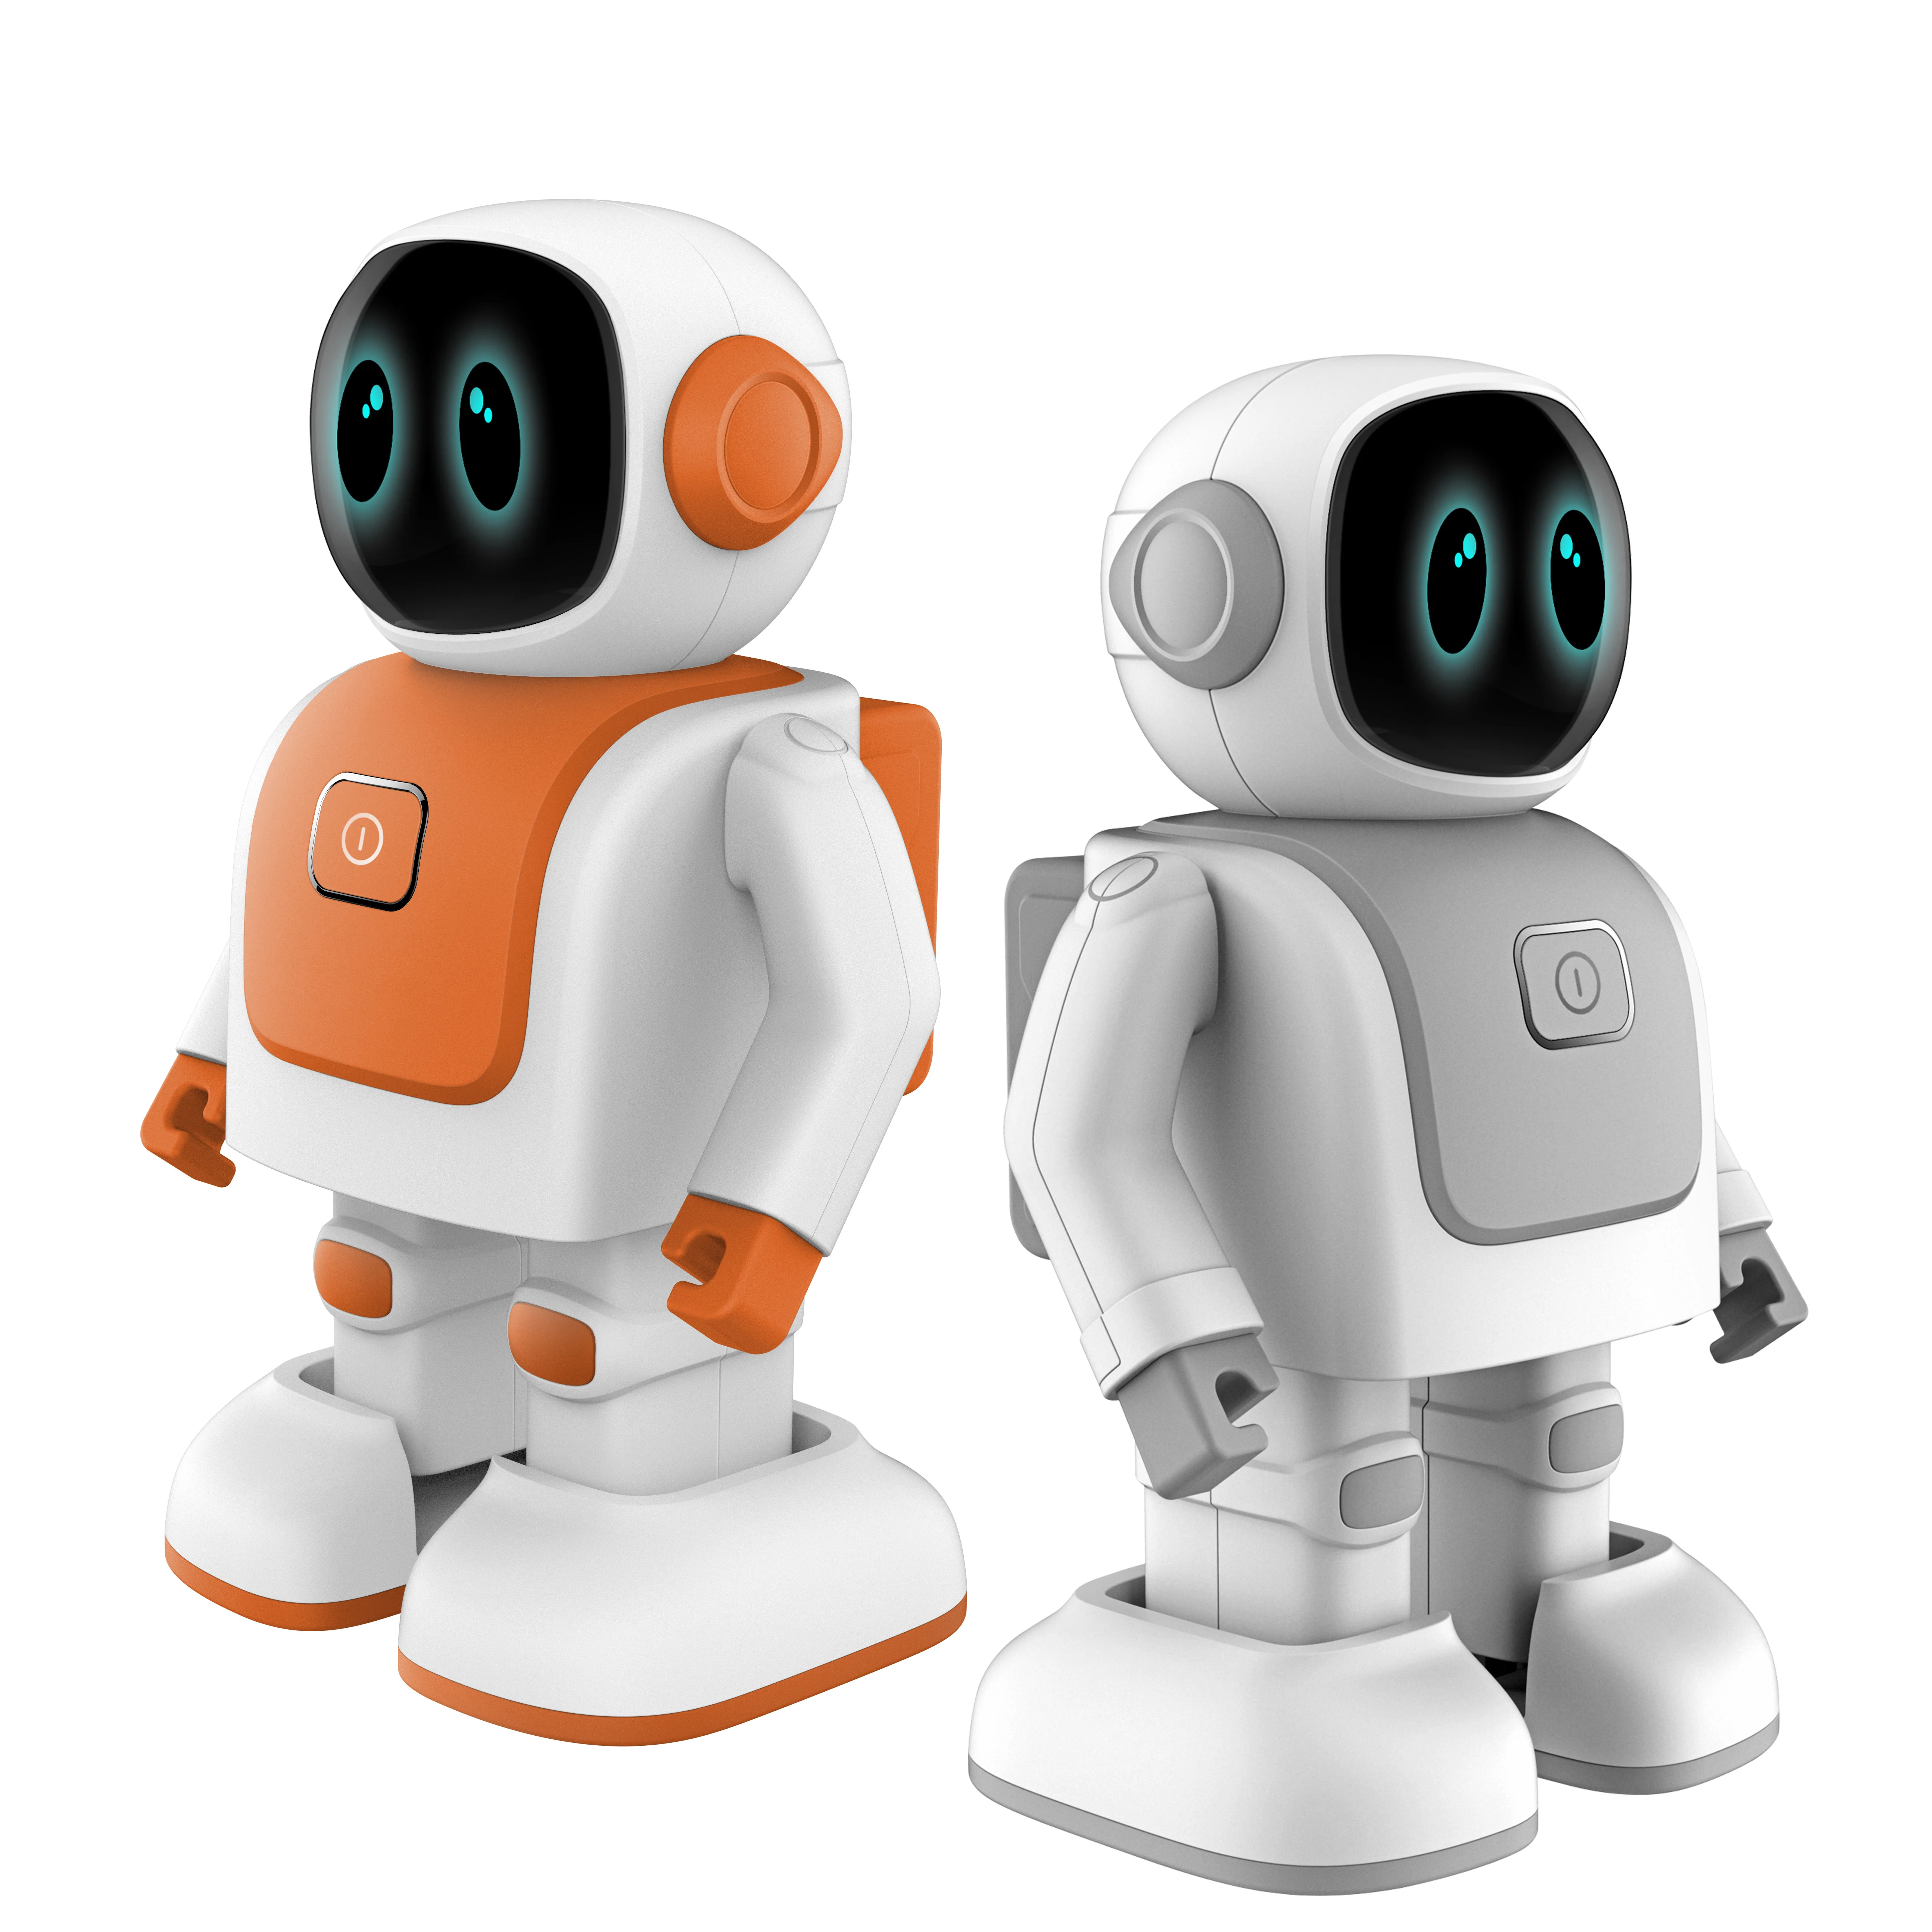 

Best Seller Dancing Robot Speaker Smart Intelligent Remote Control Programmable Interactive Robot Toy